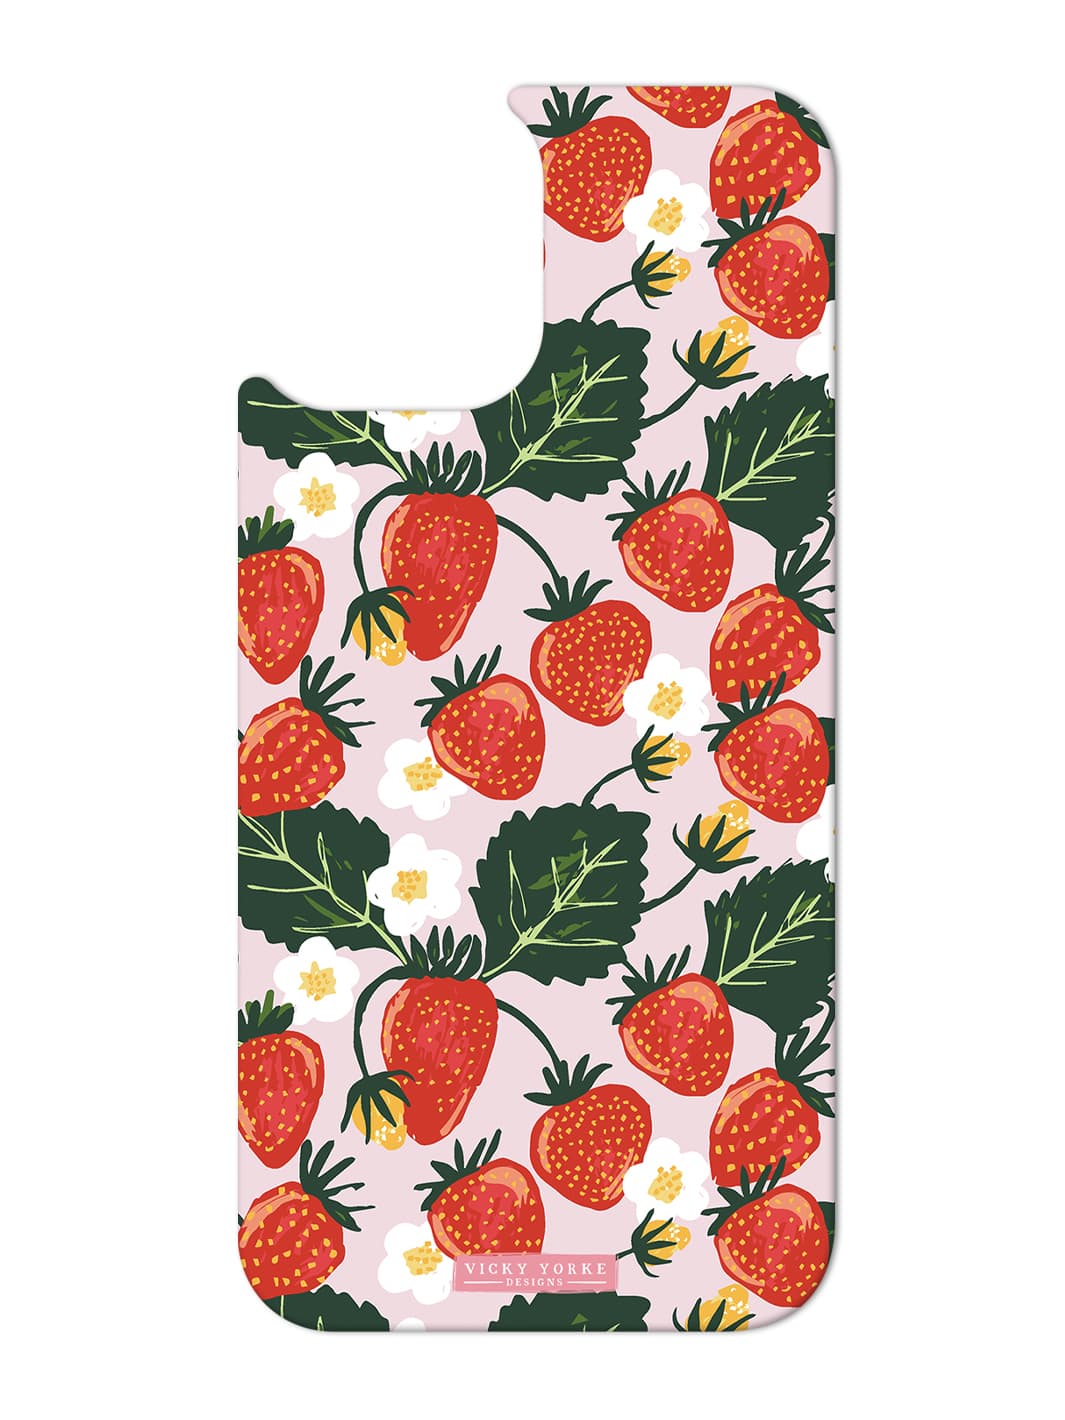 Swap - Strawberries 2